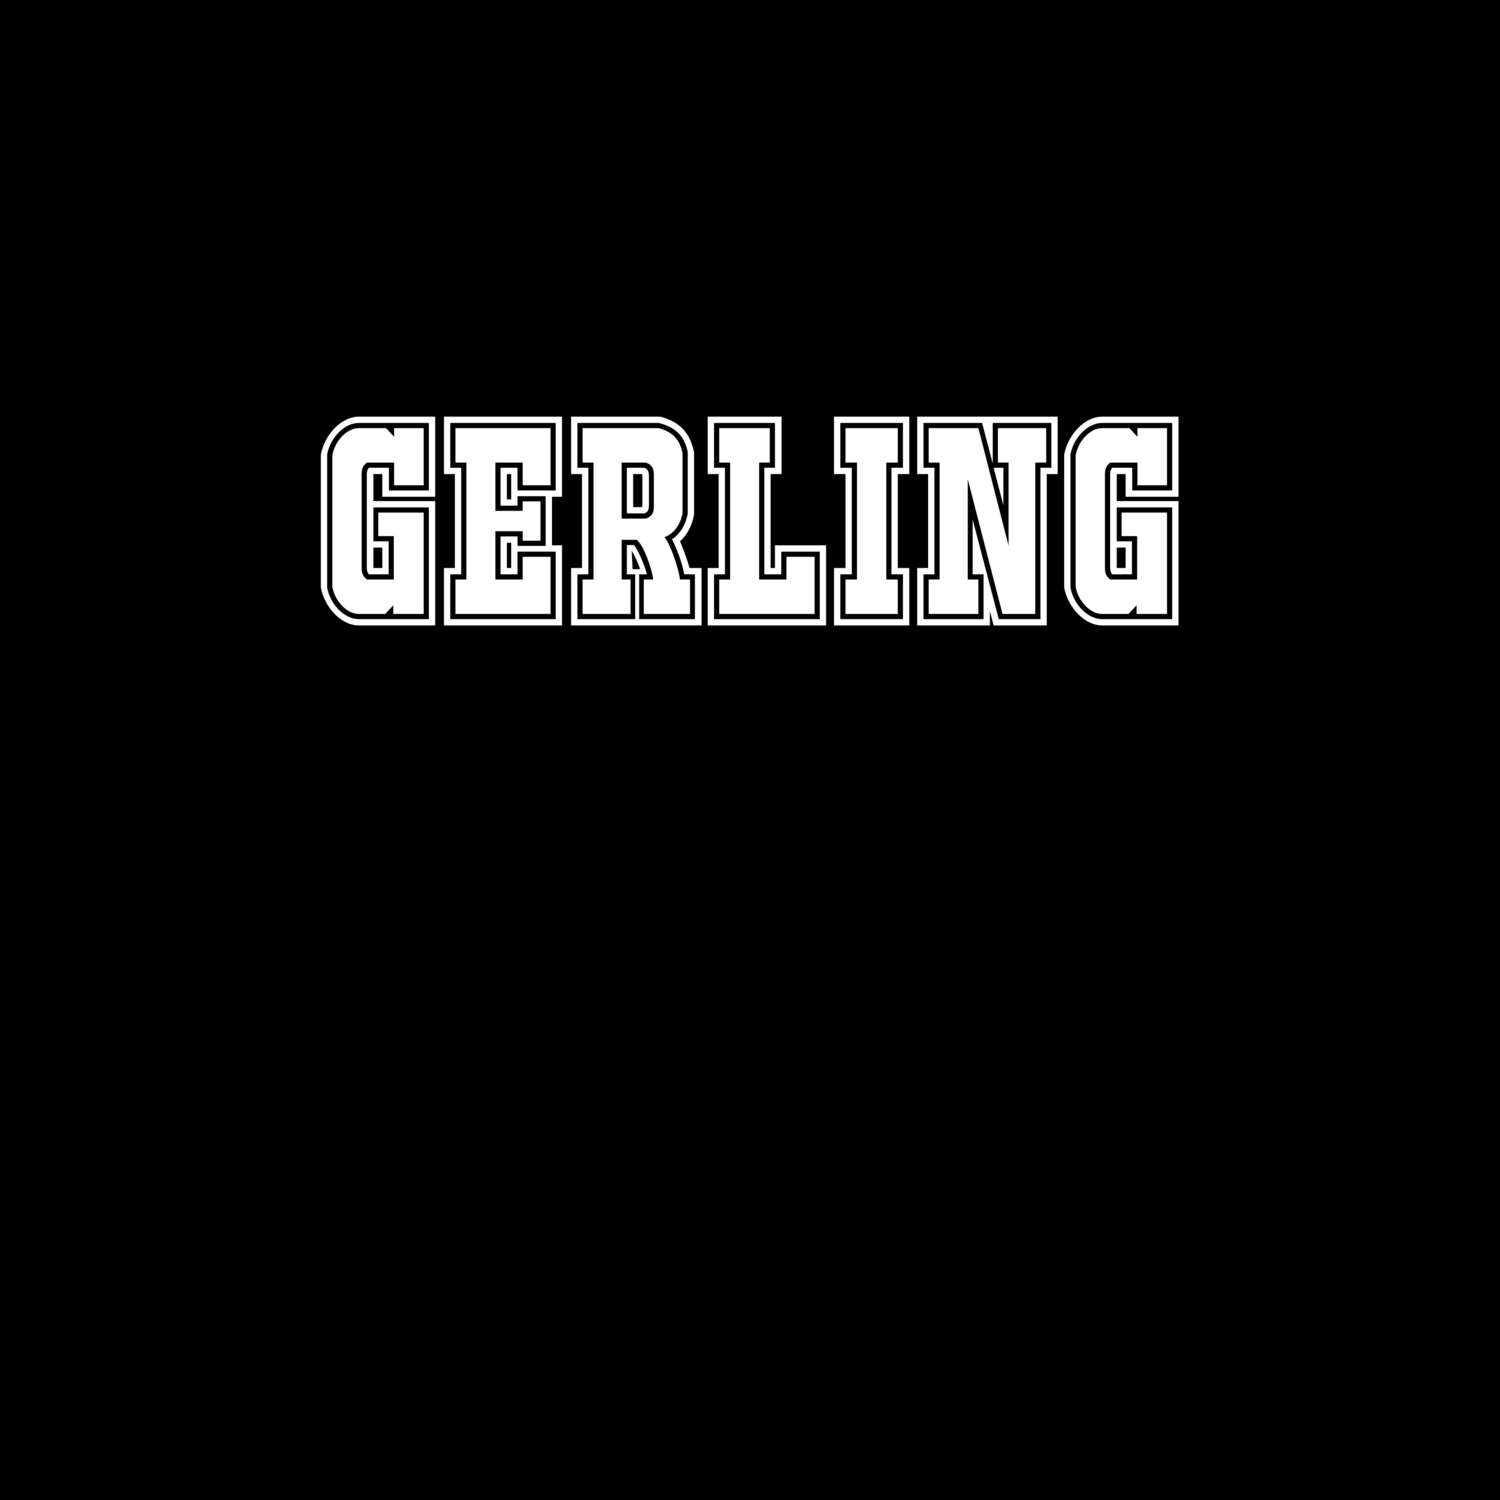 Gerling T-Shirt »Classic«